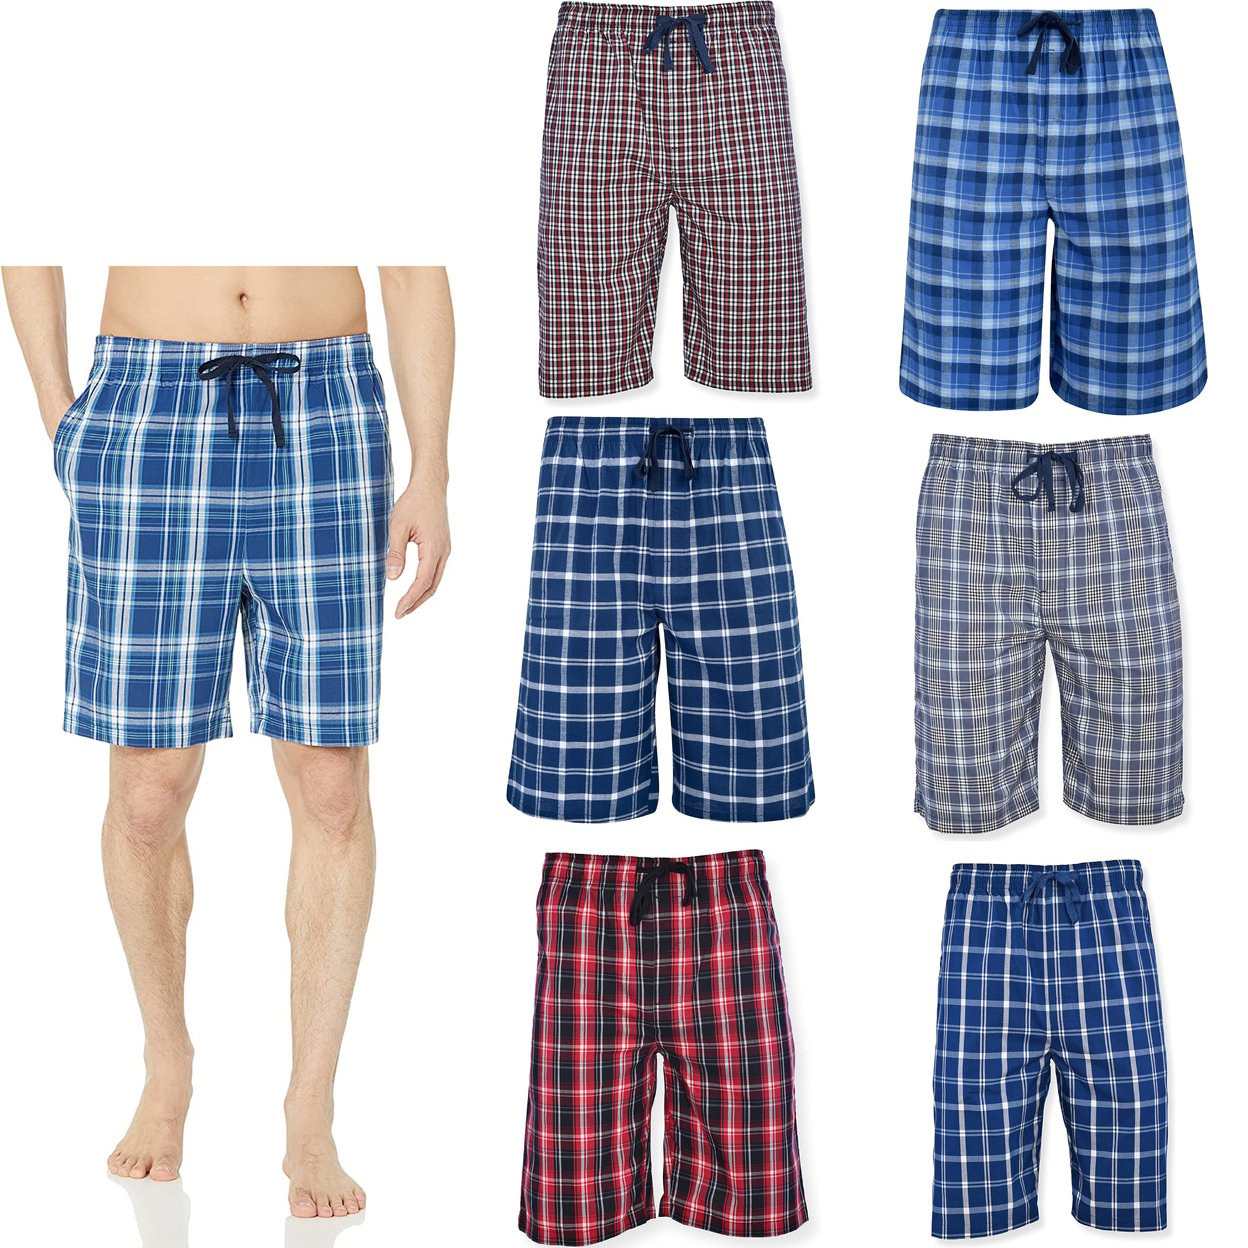 2-Pack: Men's Ultra Soft Plaid Lounge Pajama Sleep Wear Shorts - Tan & Tan, X-large